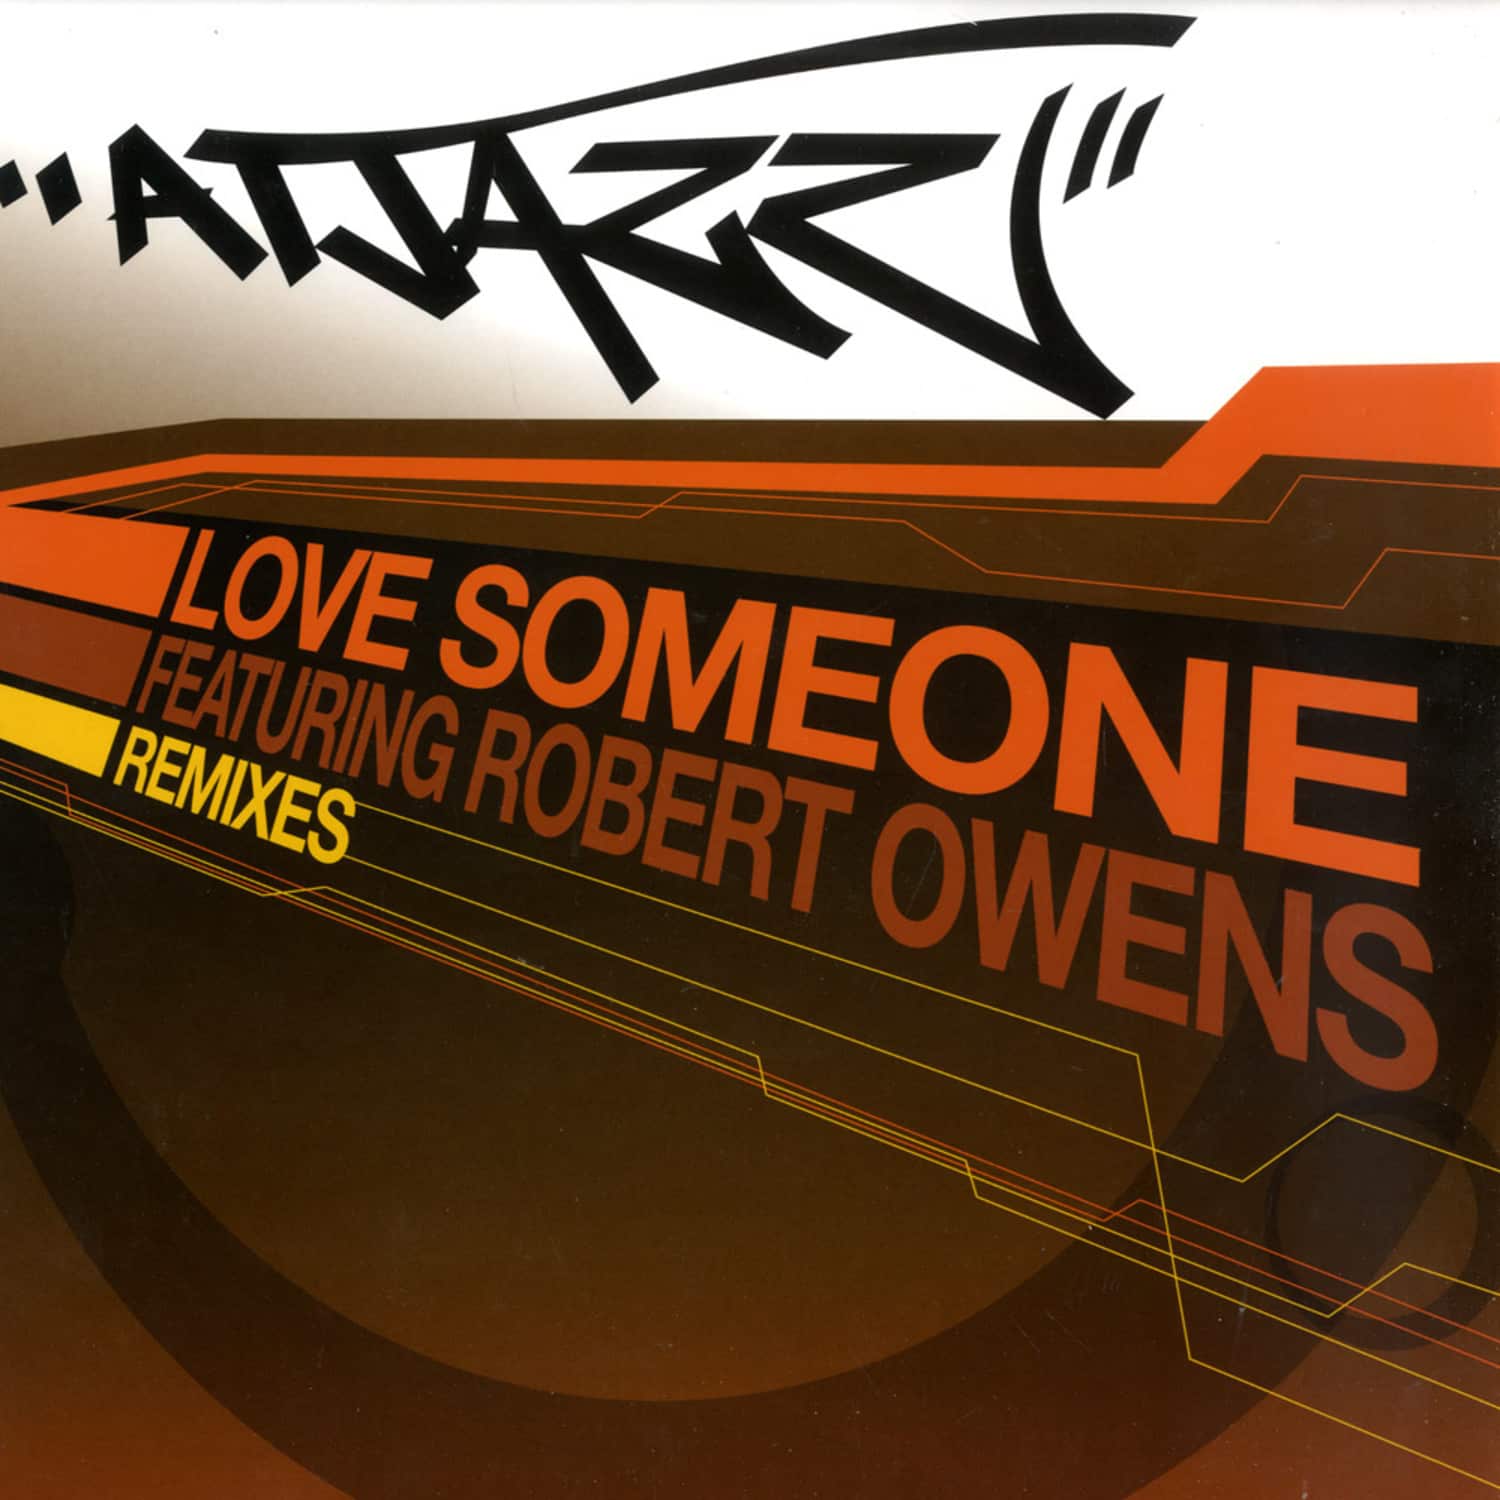 Atjazz/ Robert Owens - LOVE SOMEONE 